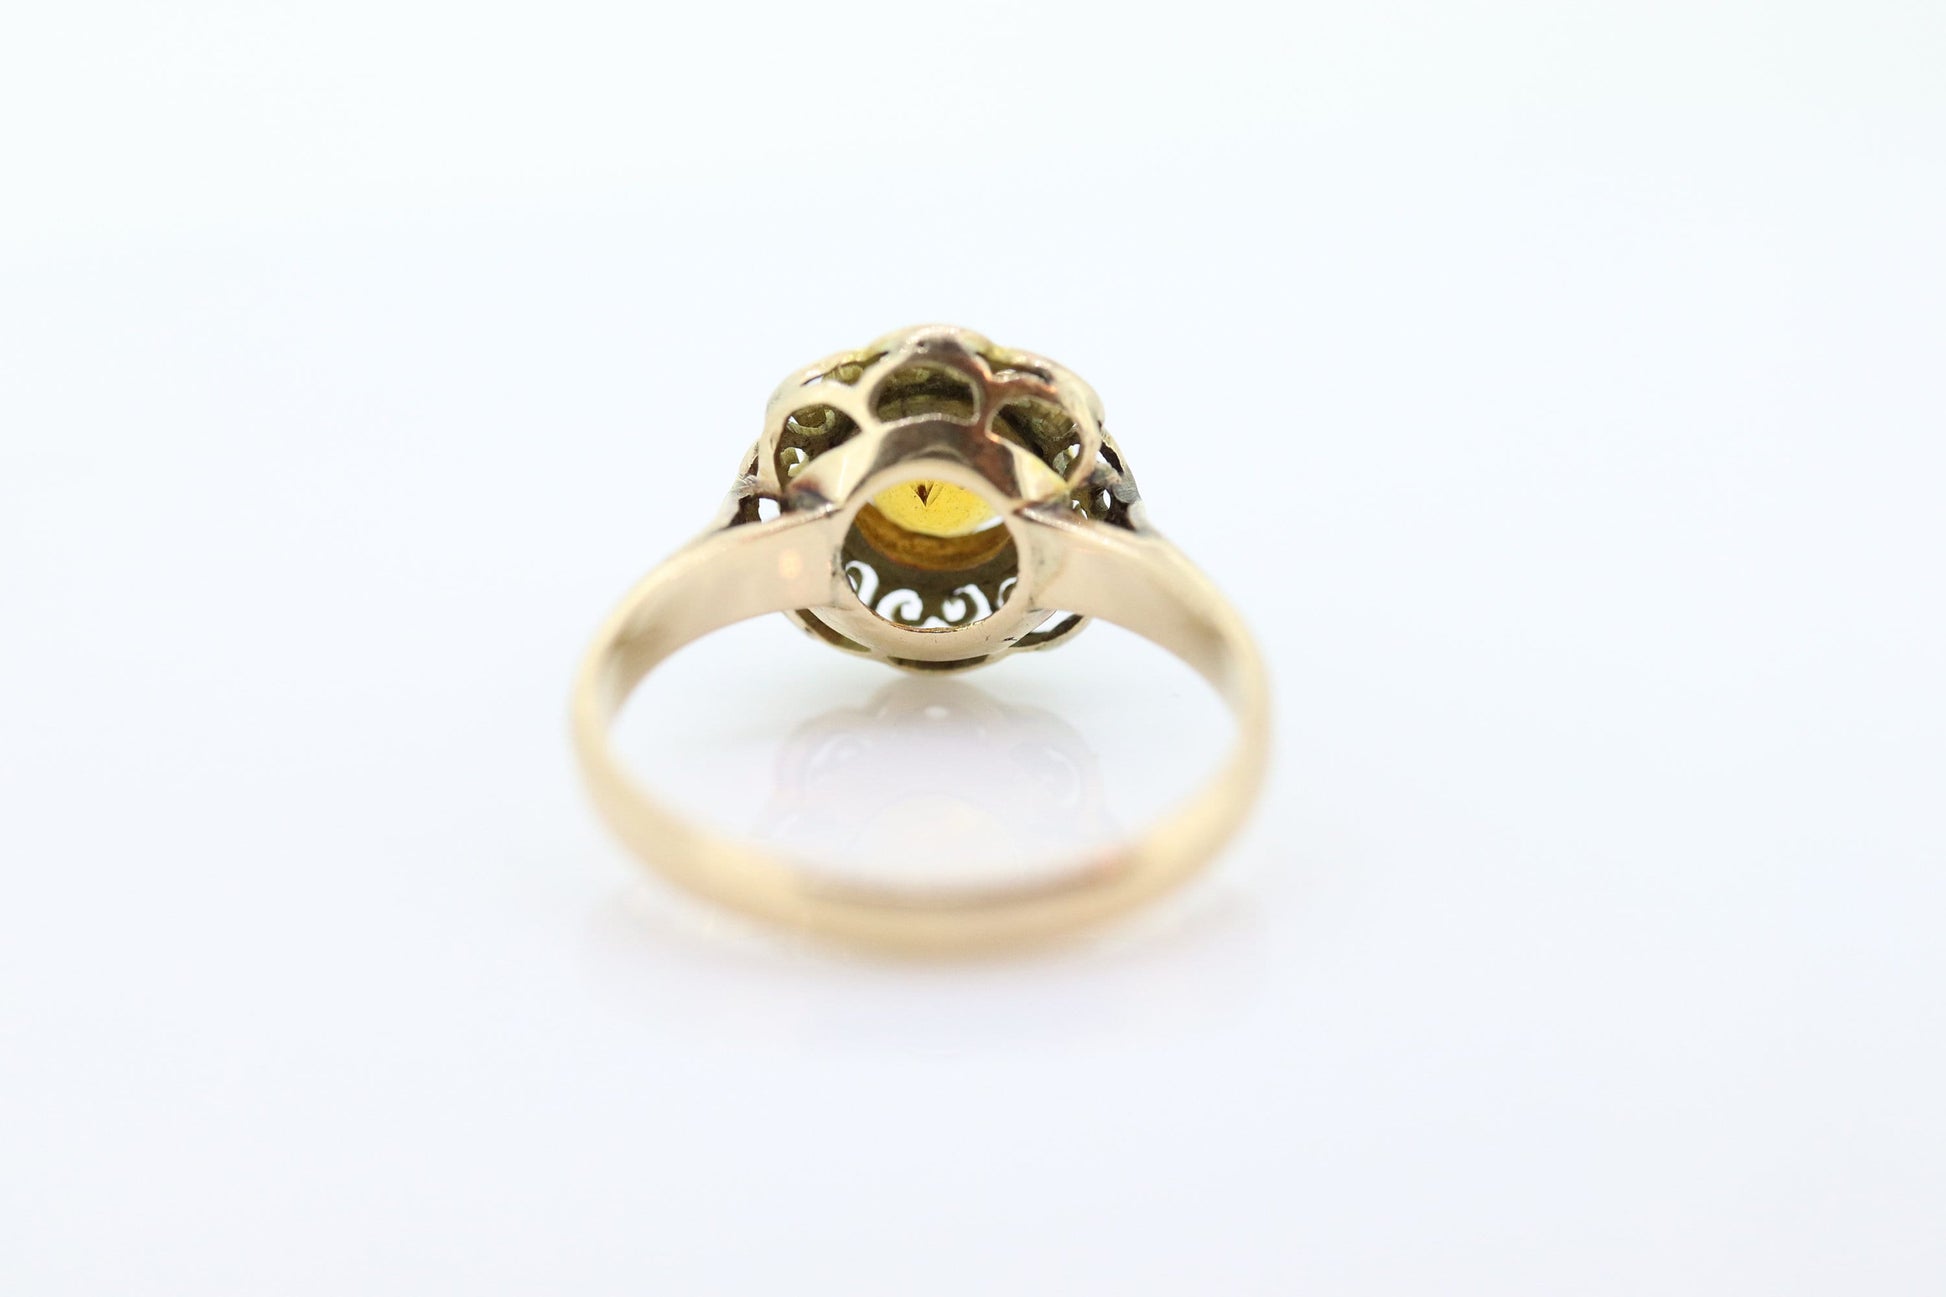 Antique Citrine Flower ring. Hand made 10k yellow gold flower Filigree ring